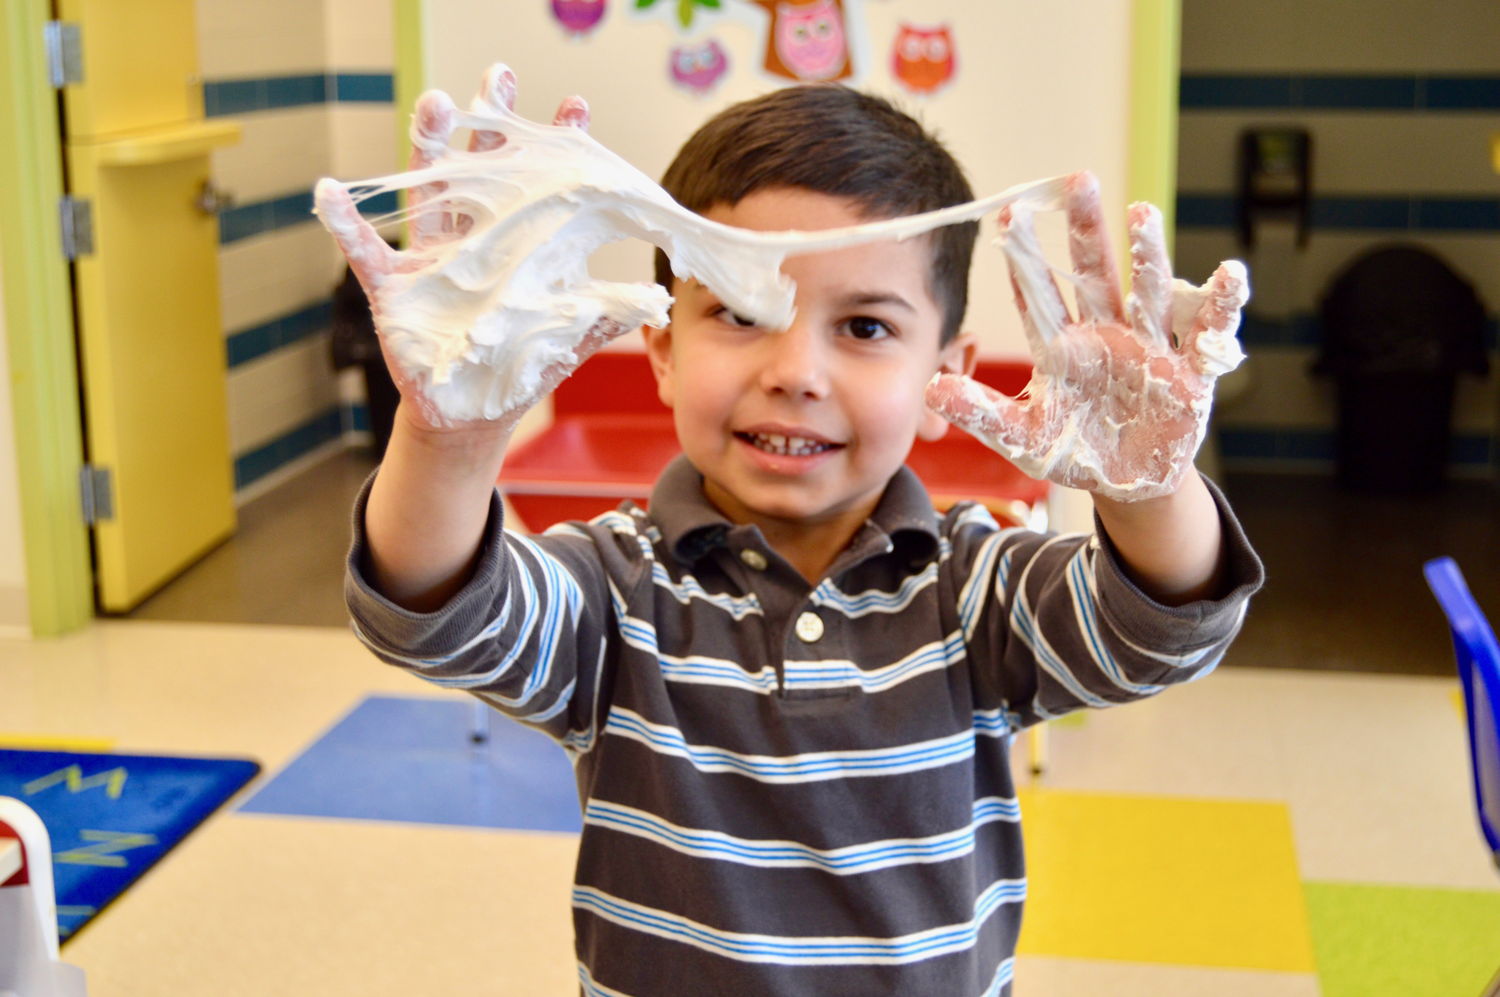 Exploring slime and STEM learning in preschool room